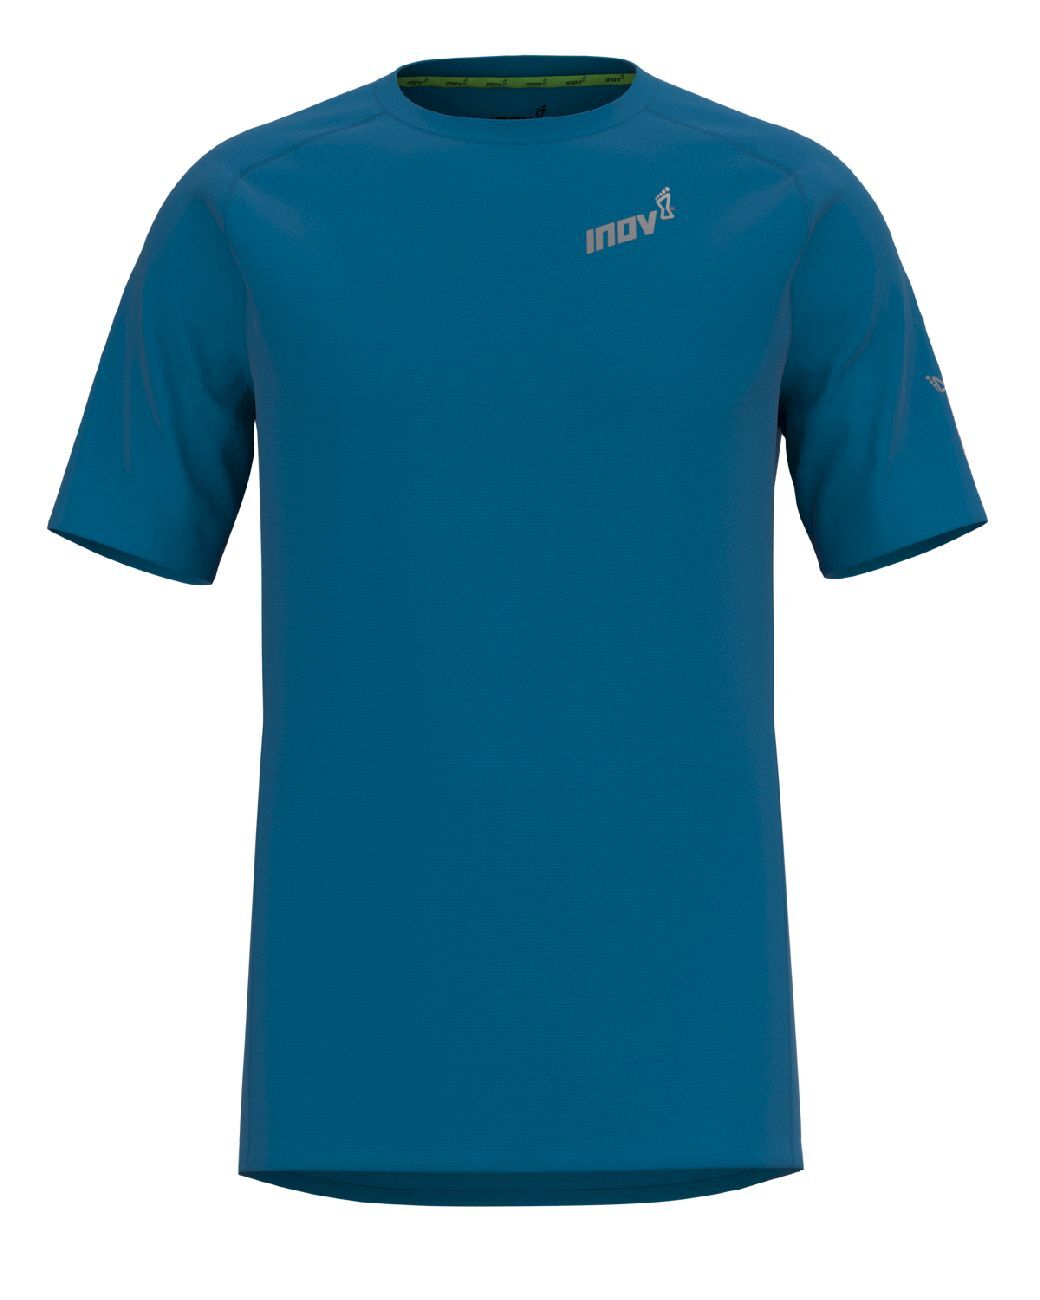 Inov-8 Base Elite SS - T-shirt - Men's